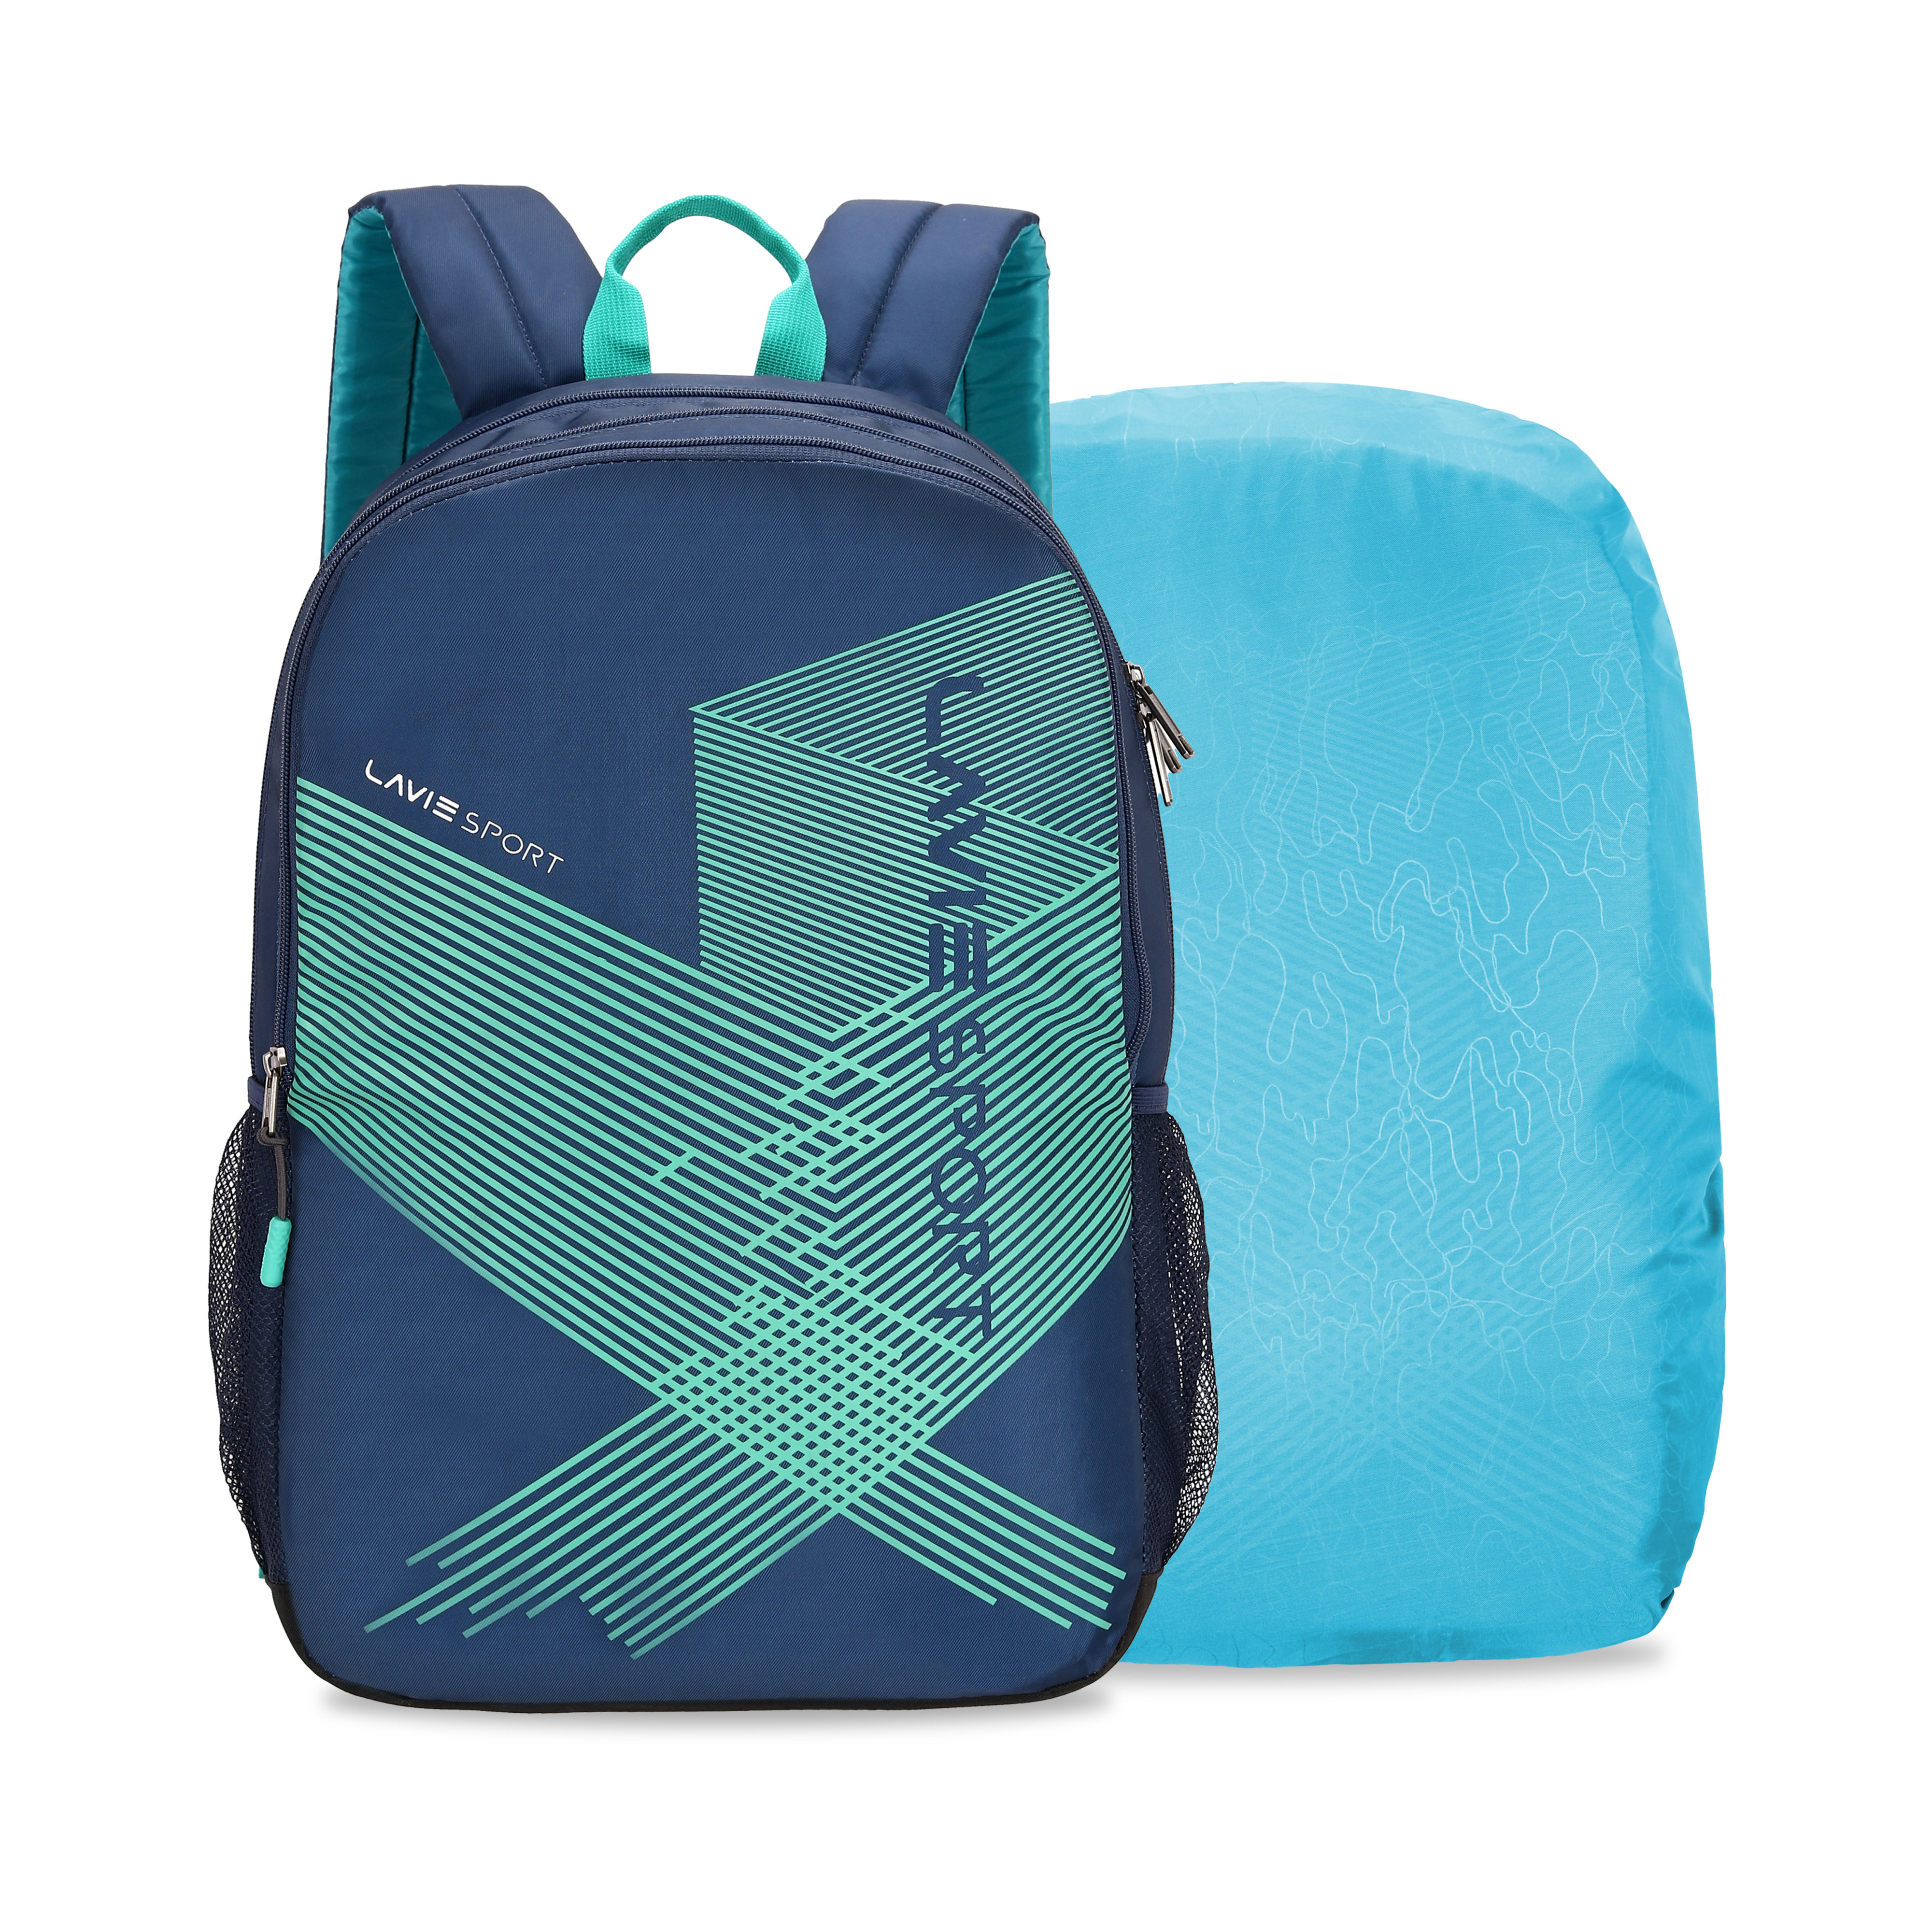 Lavie College Bags - Buy Lavie College Bags online in India